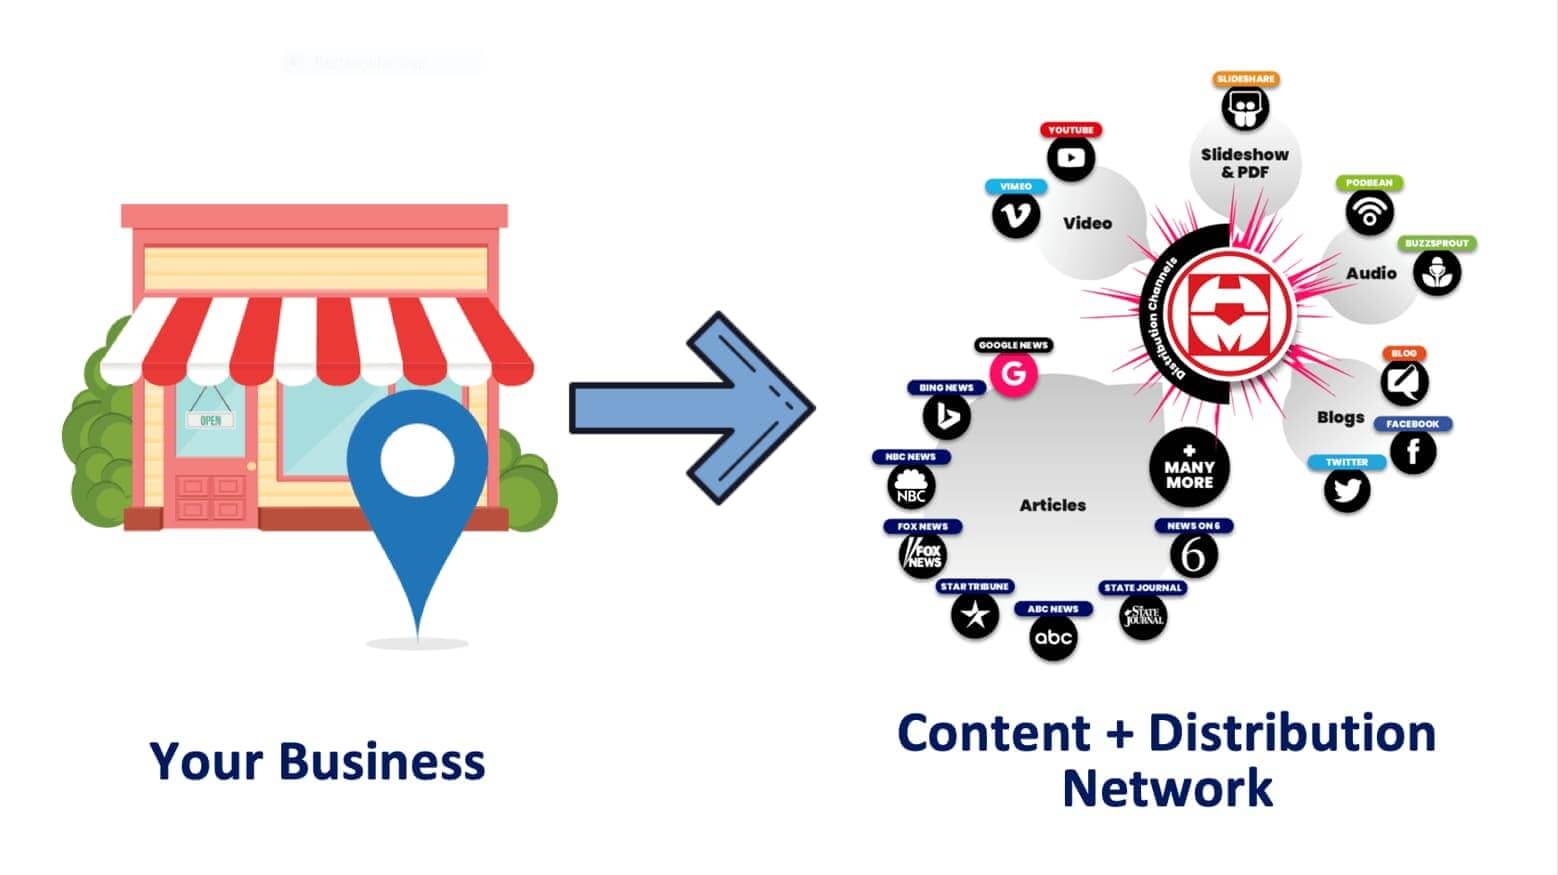 Media campaign content + distribution network